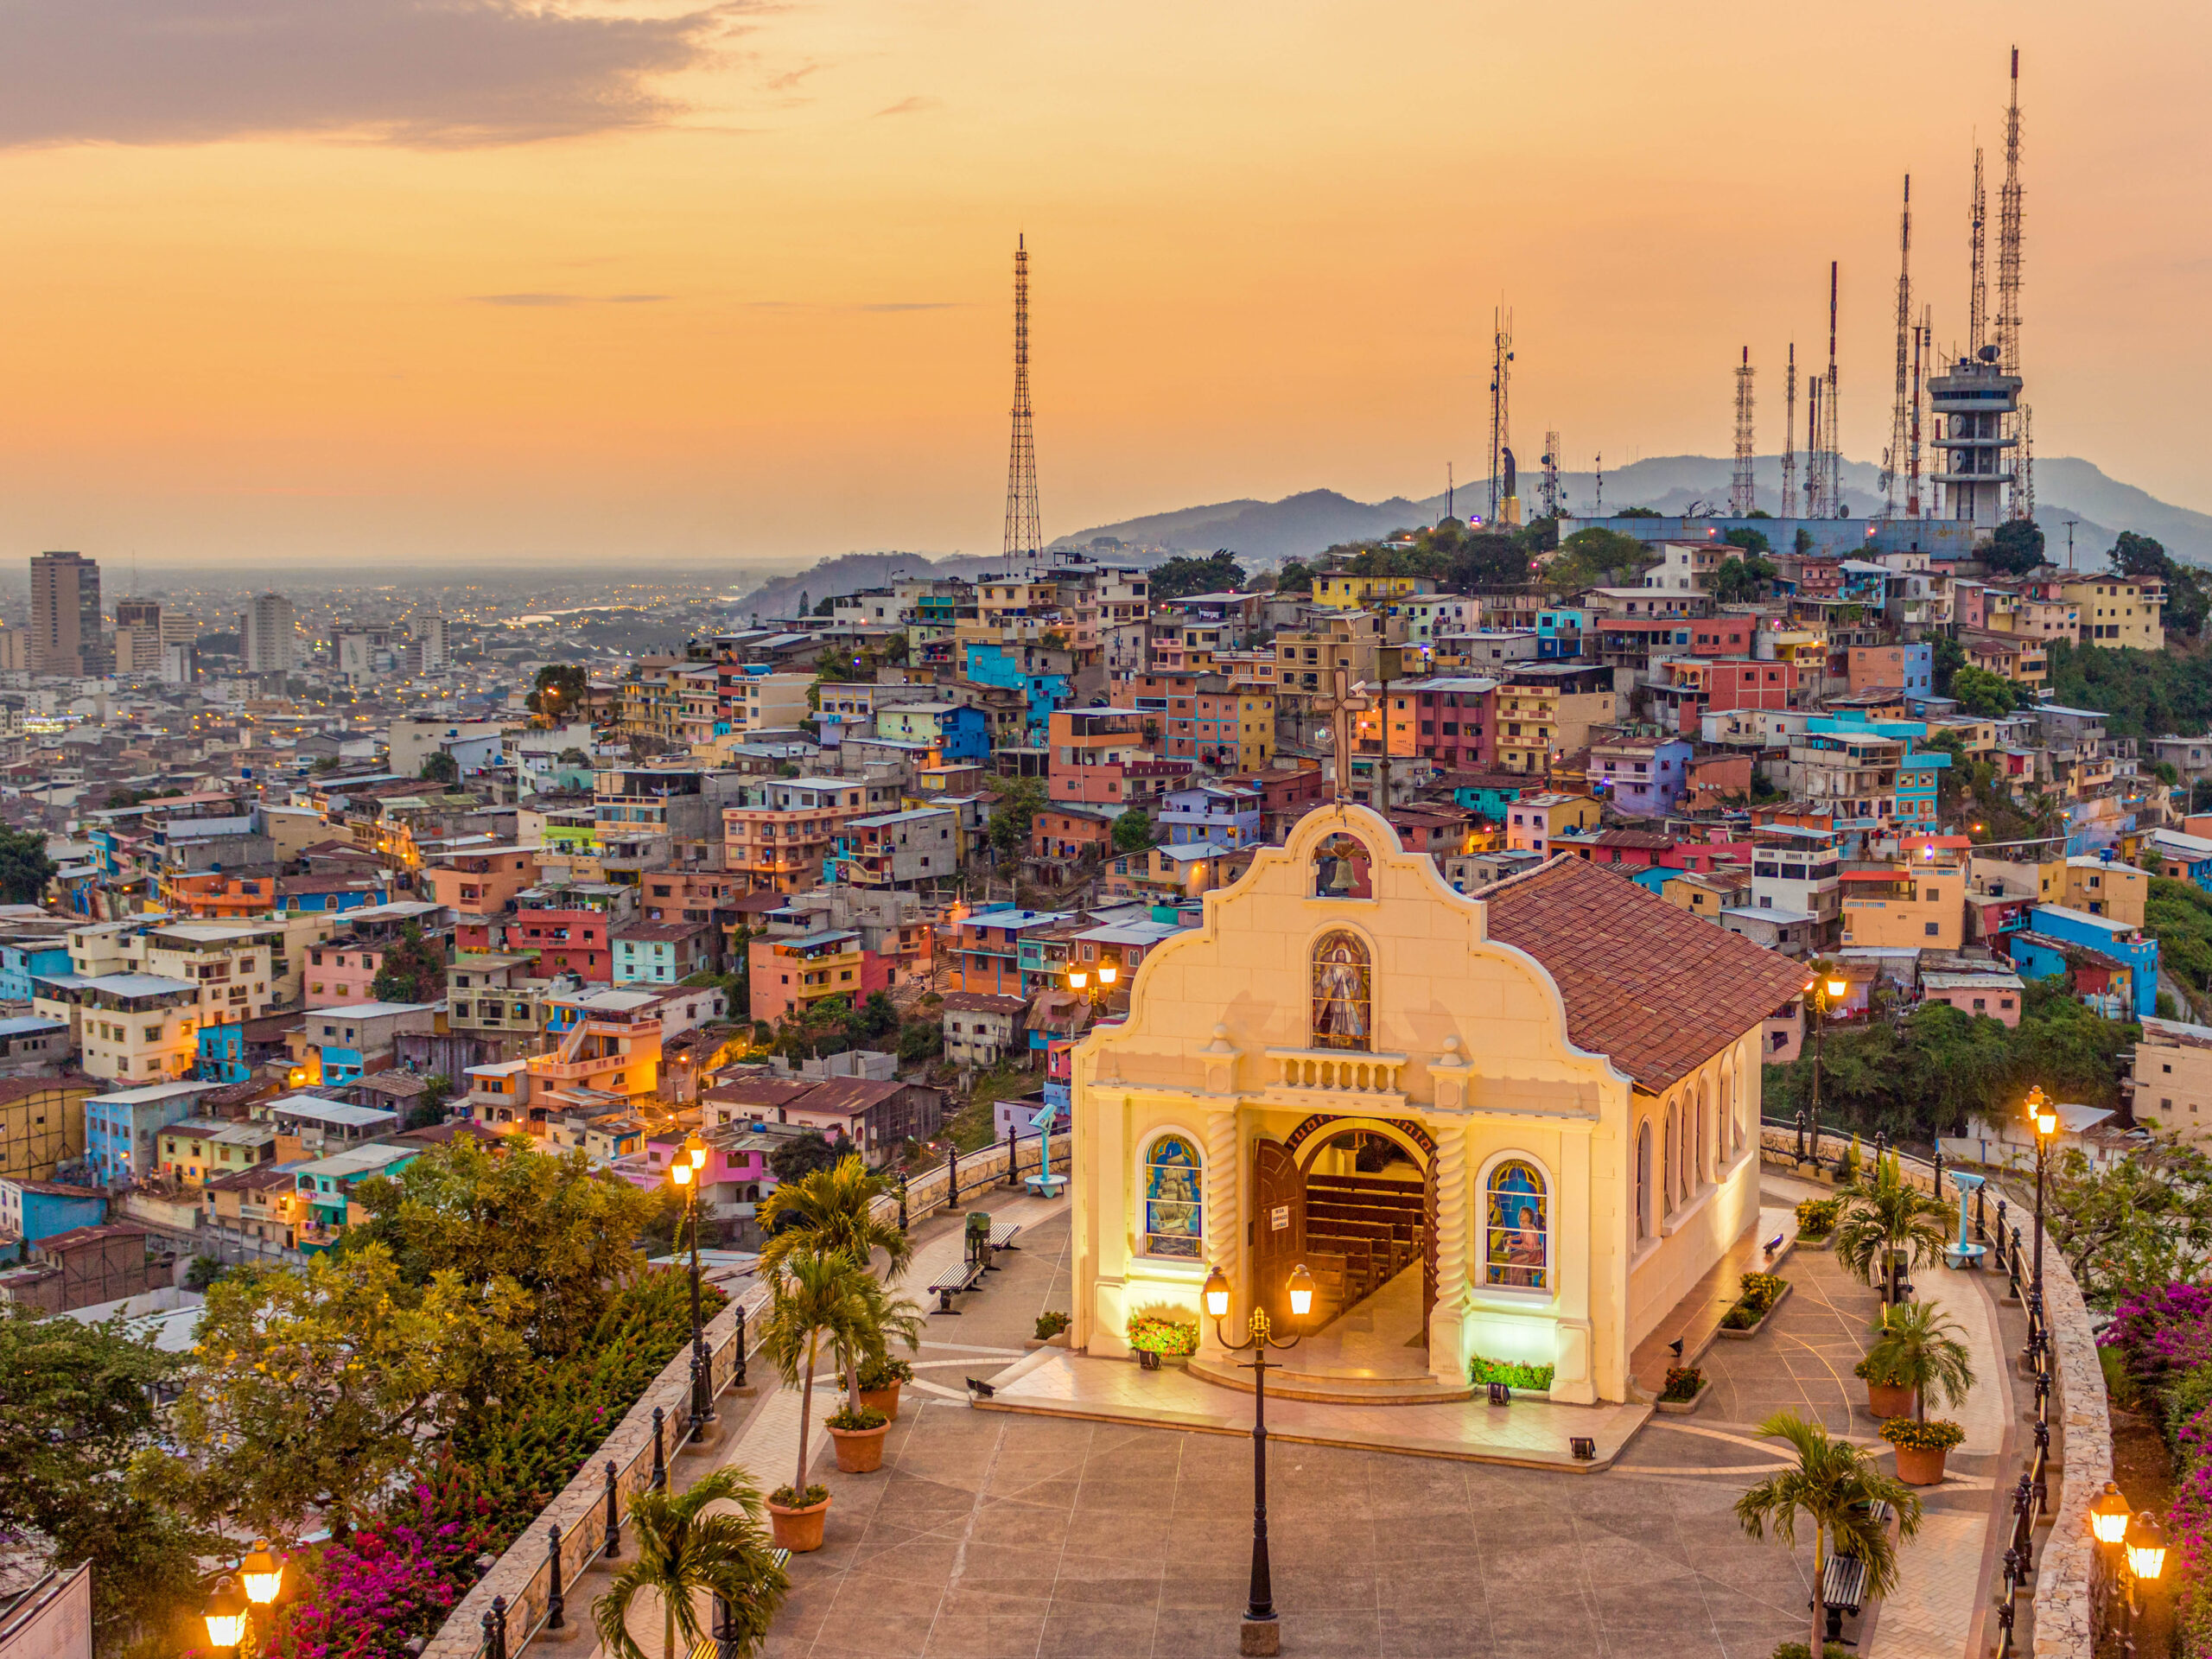 Santa Ana Hill in Guayaquil